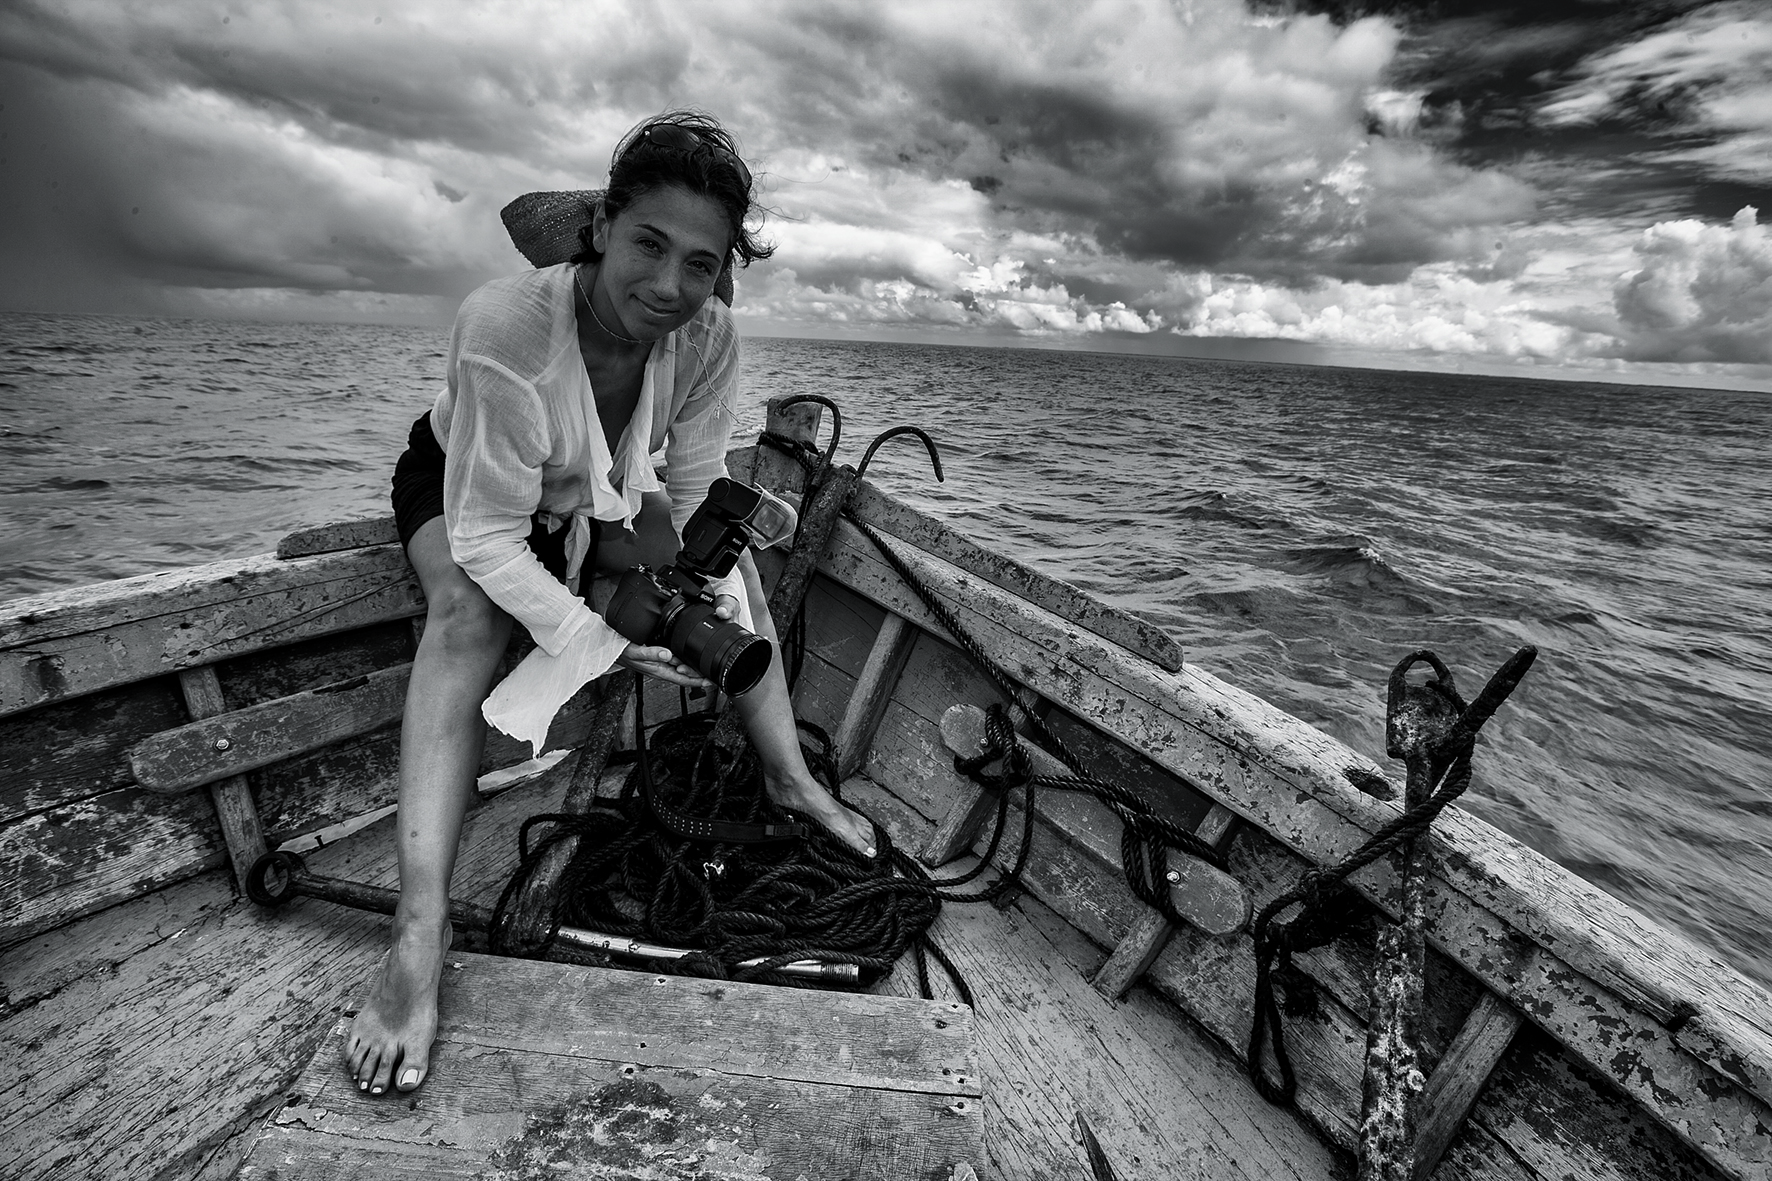 Cristina Mitermeir on a boat